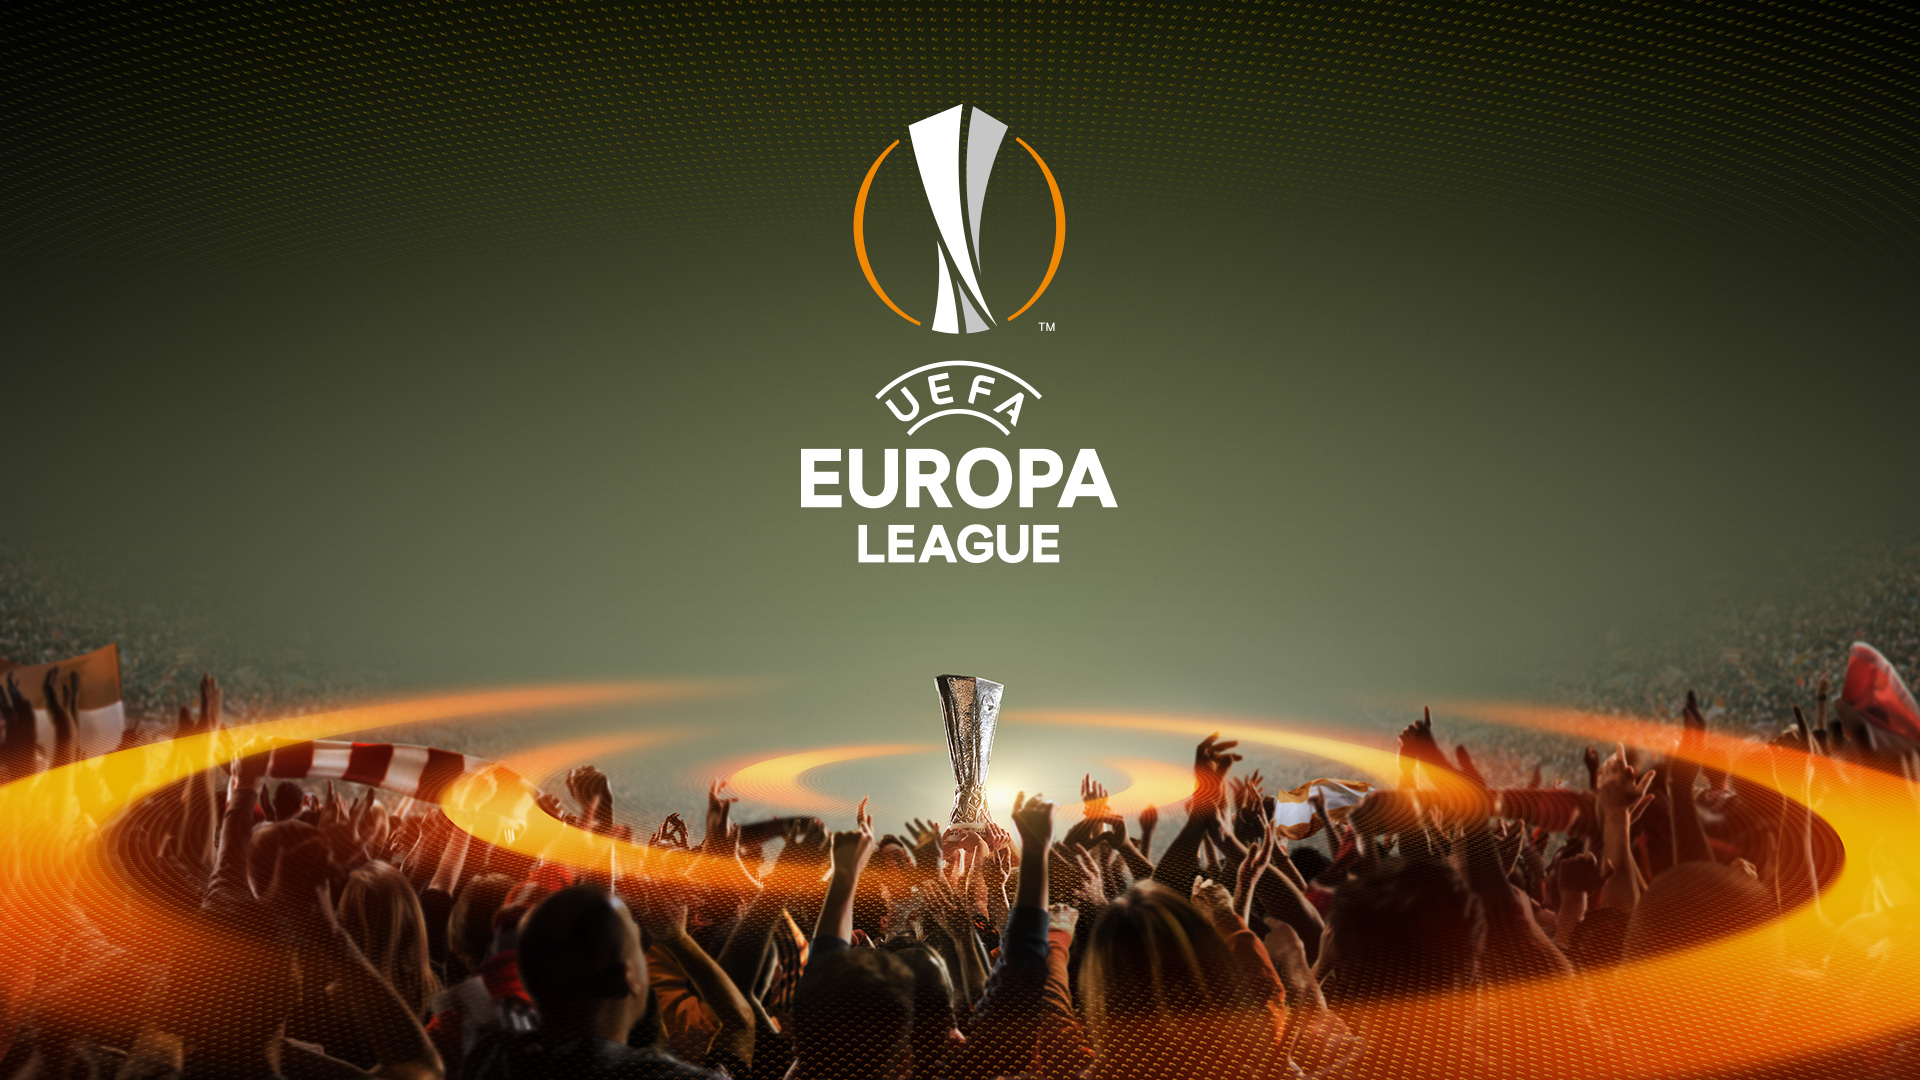 Лига кубок уефа. Лига Европы УЕФА фон. Лига Европы УЕФА 256x256. UEFA Europa League логотип. Герб Лиги Европы.